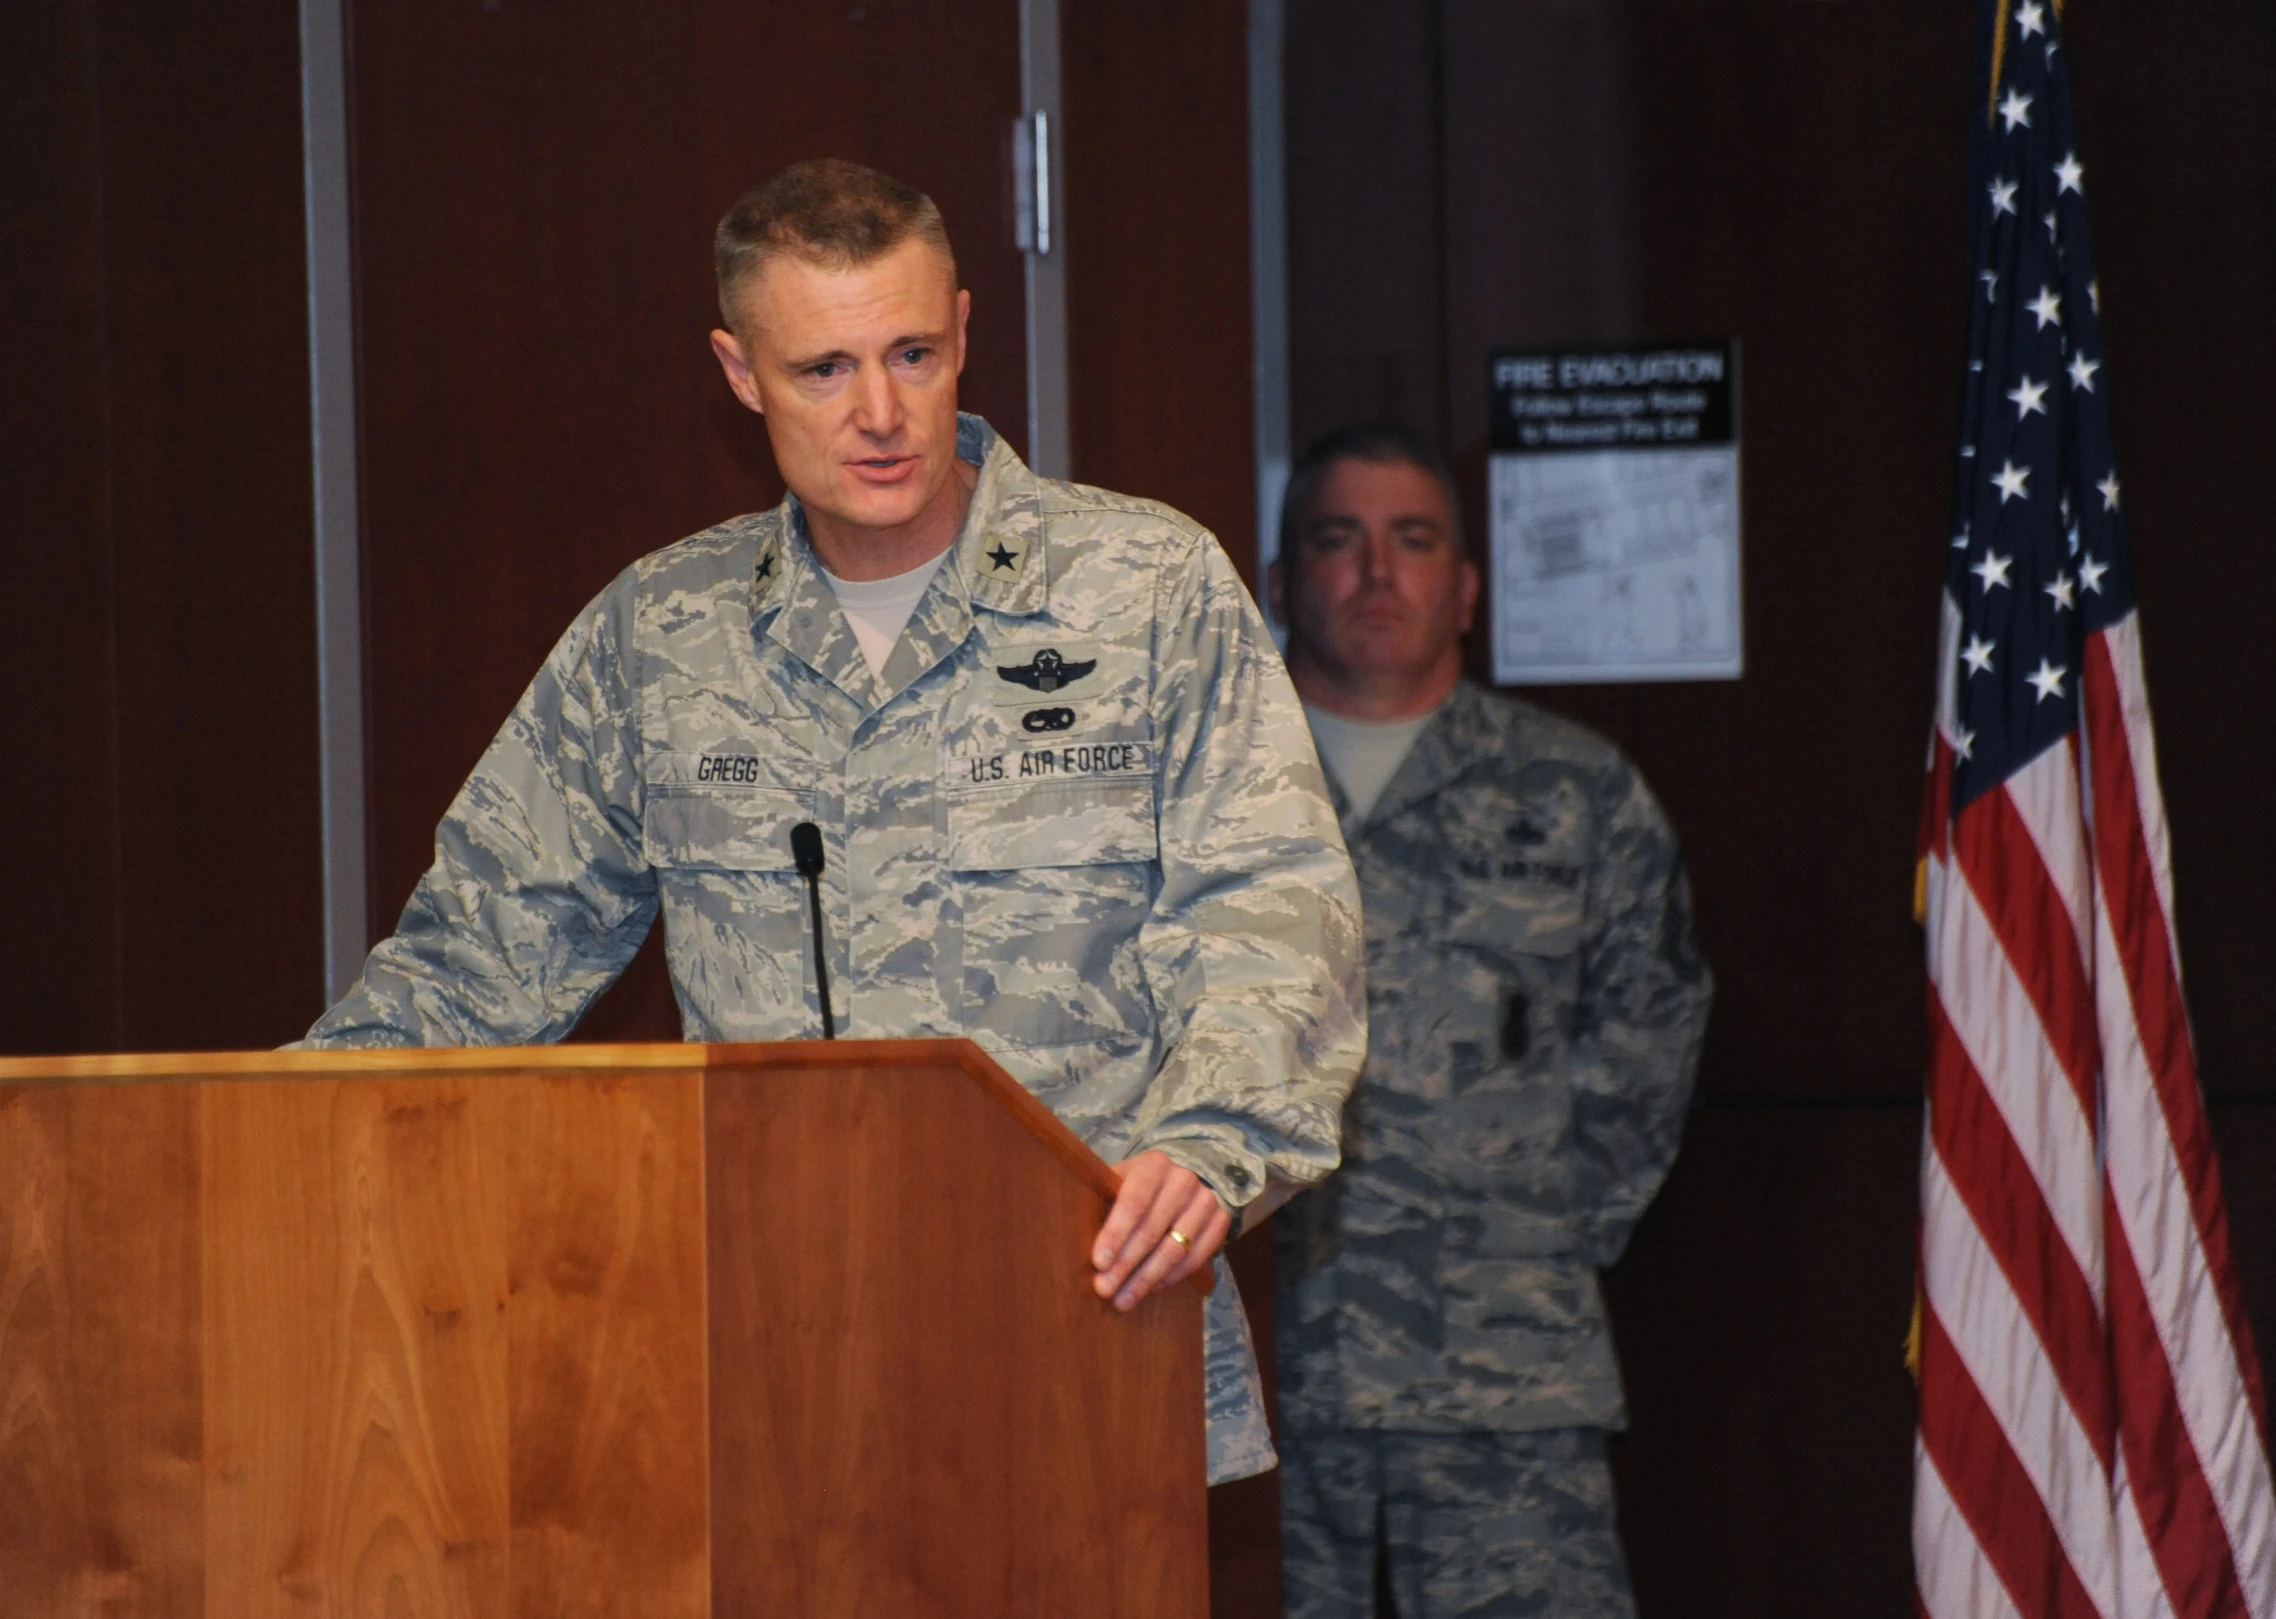 a soldier giving a speech at a podium